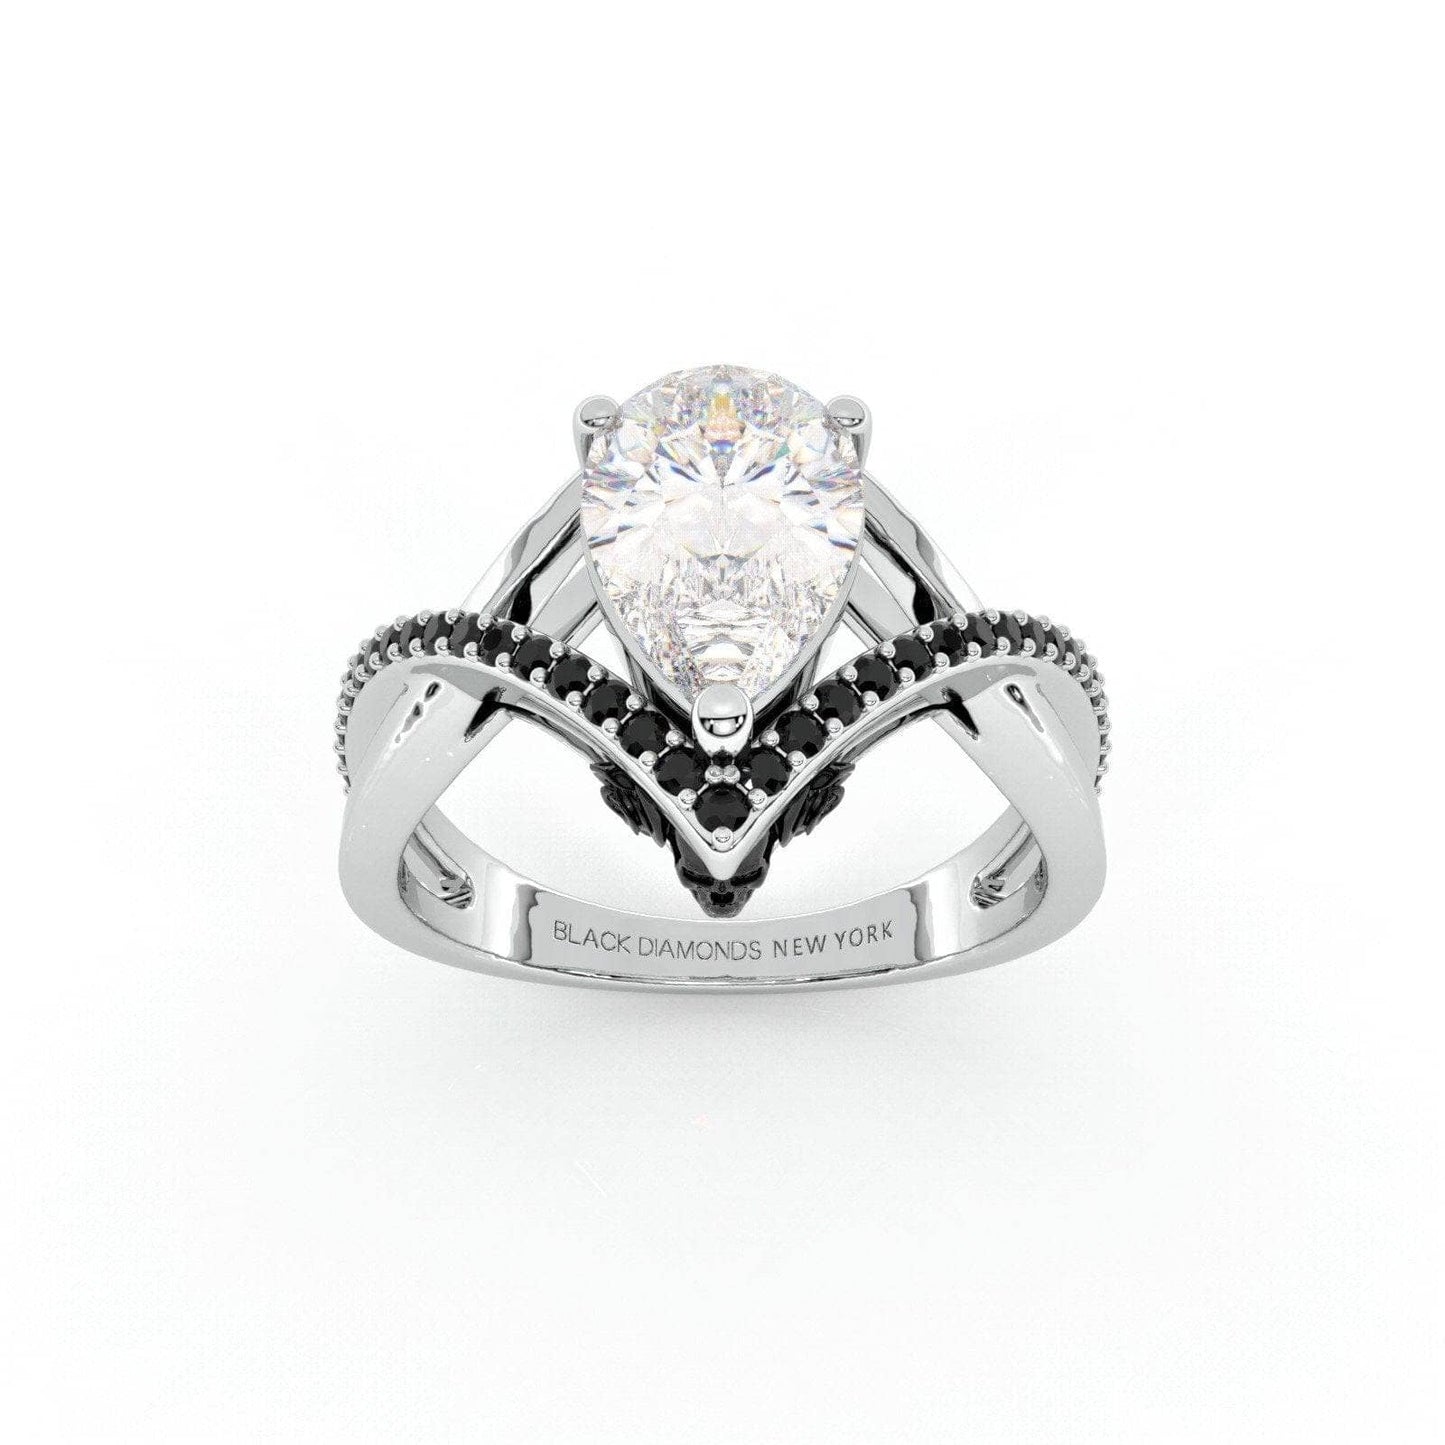 Flash Sale- Only You- 1.5 Carat Pear Cut EVN™ Diamond Skull & Roses Wedding Ring - Black Diamonds New York